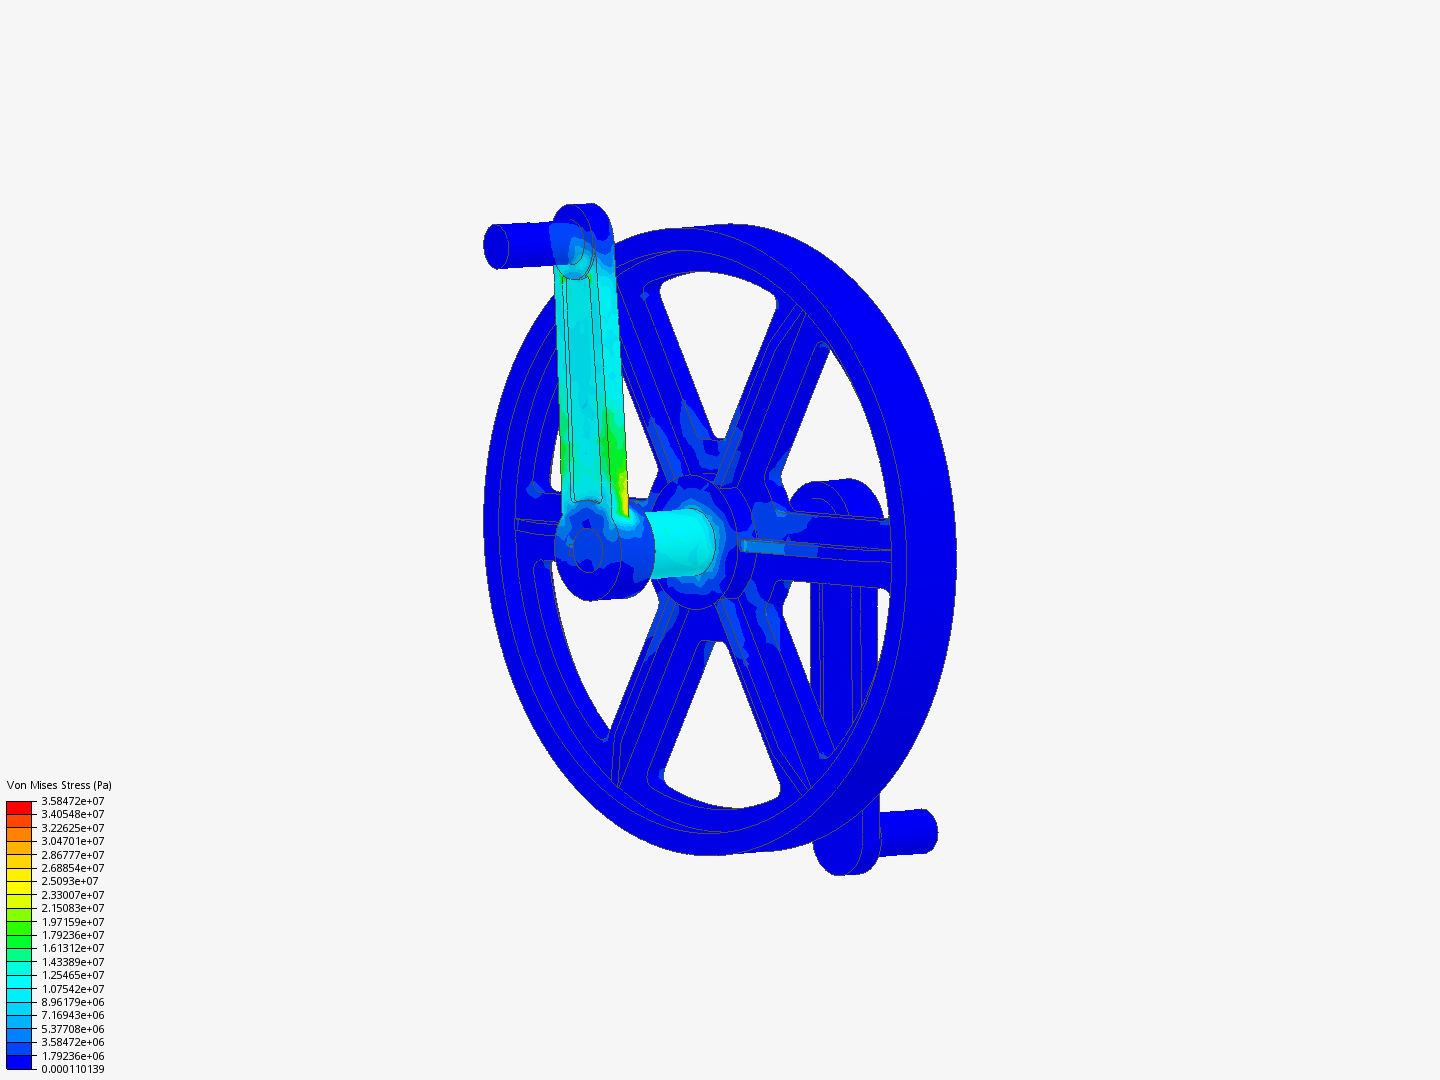 Simulation of a Crank Assembly - Ochoa image